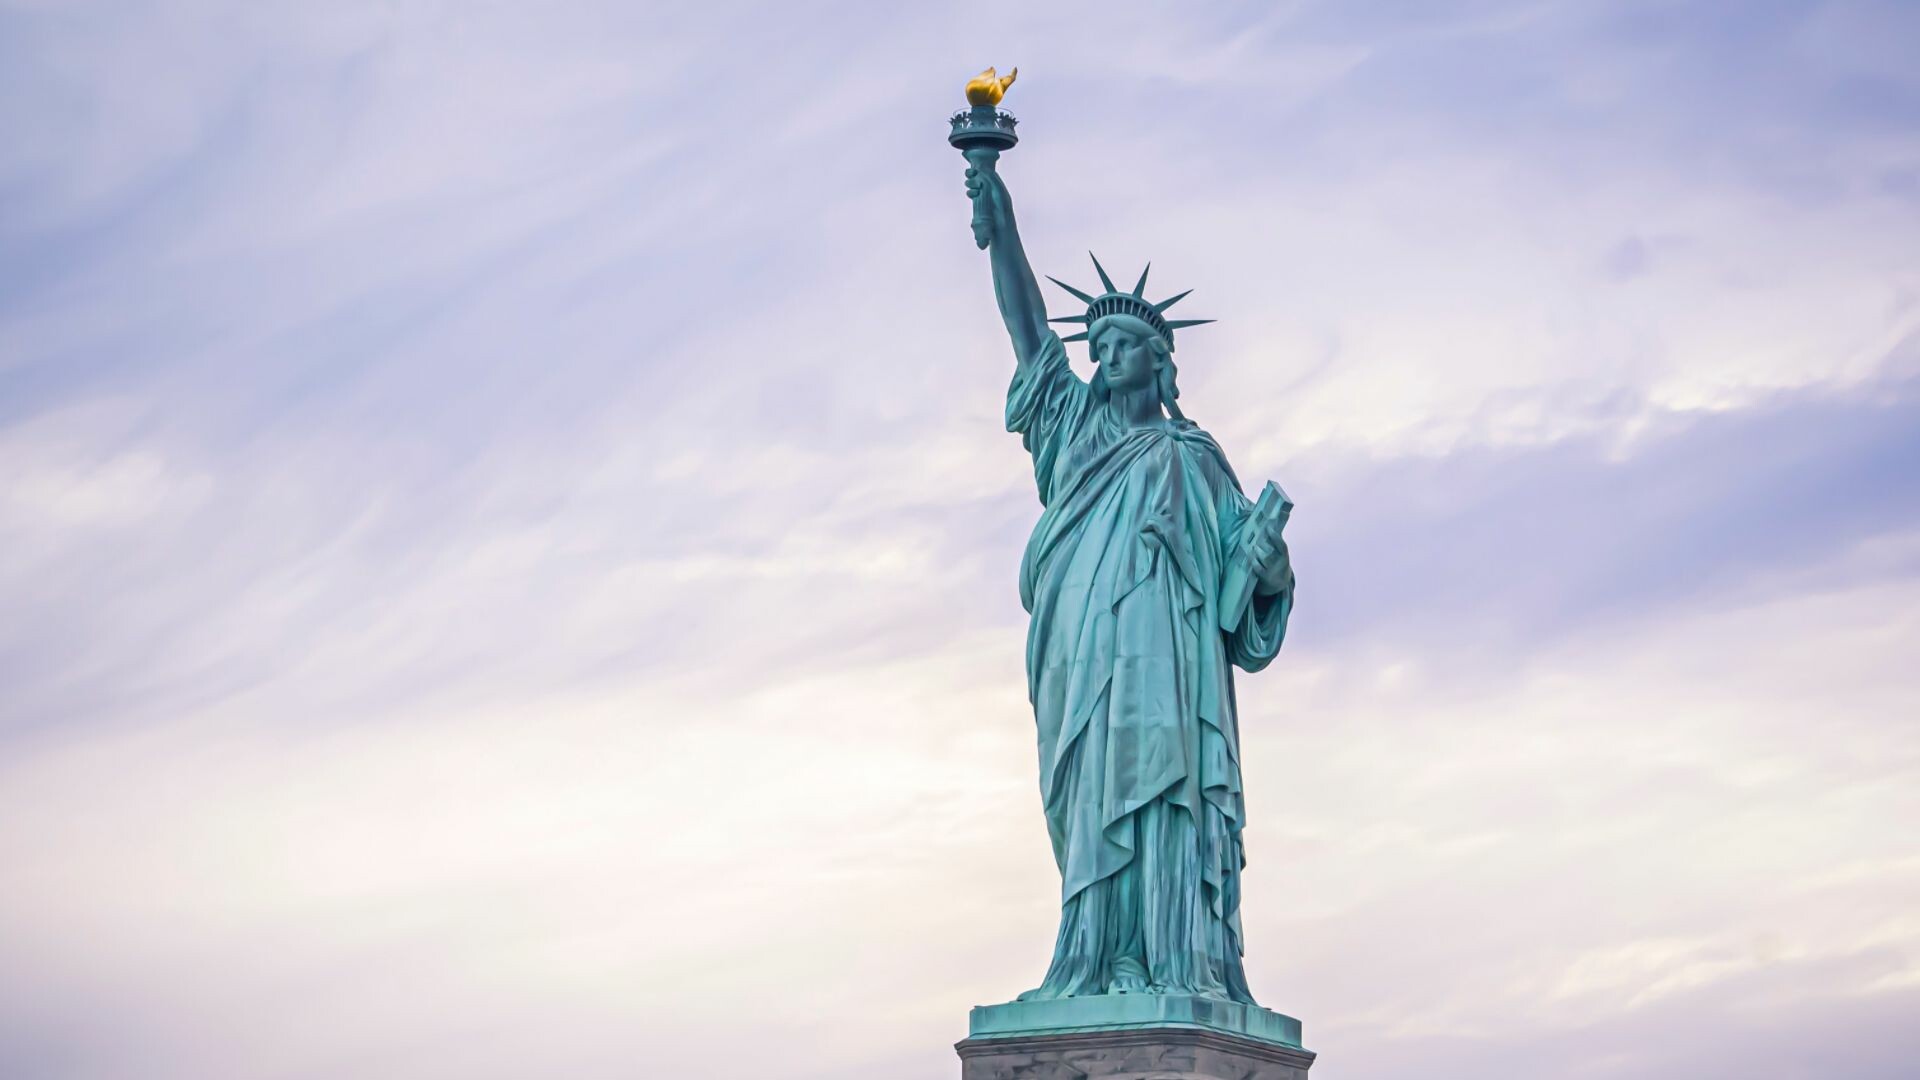 Statue of Liberty: America’s premier symbol, Sculpture, NY. 1920x1080 Full HD Wallpaper.